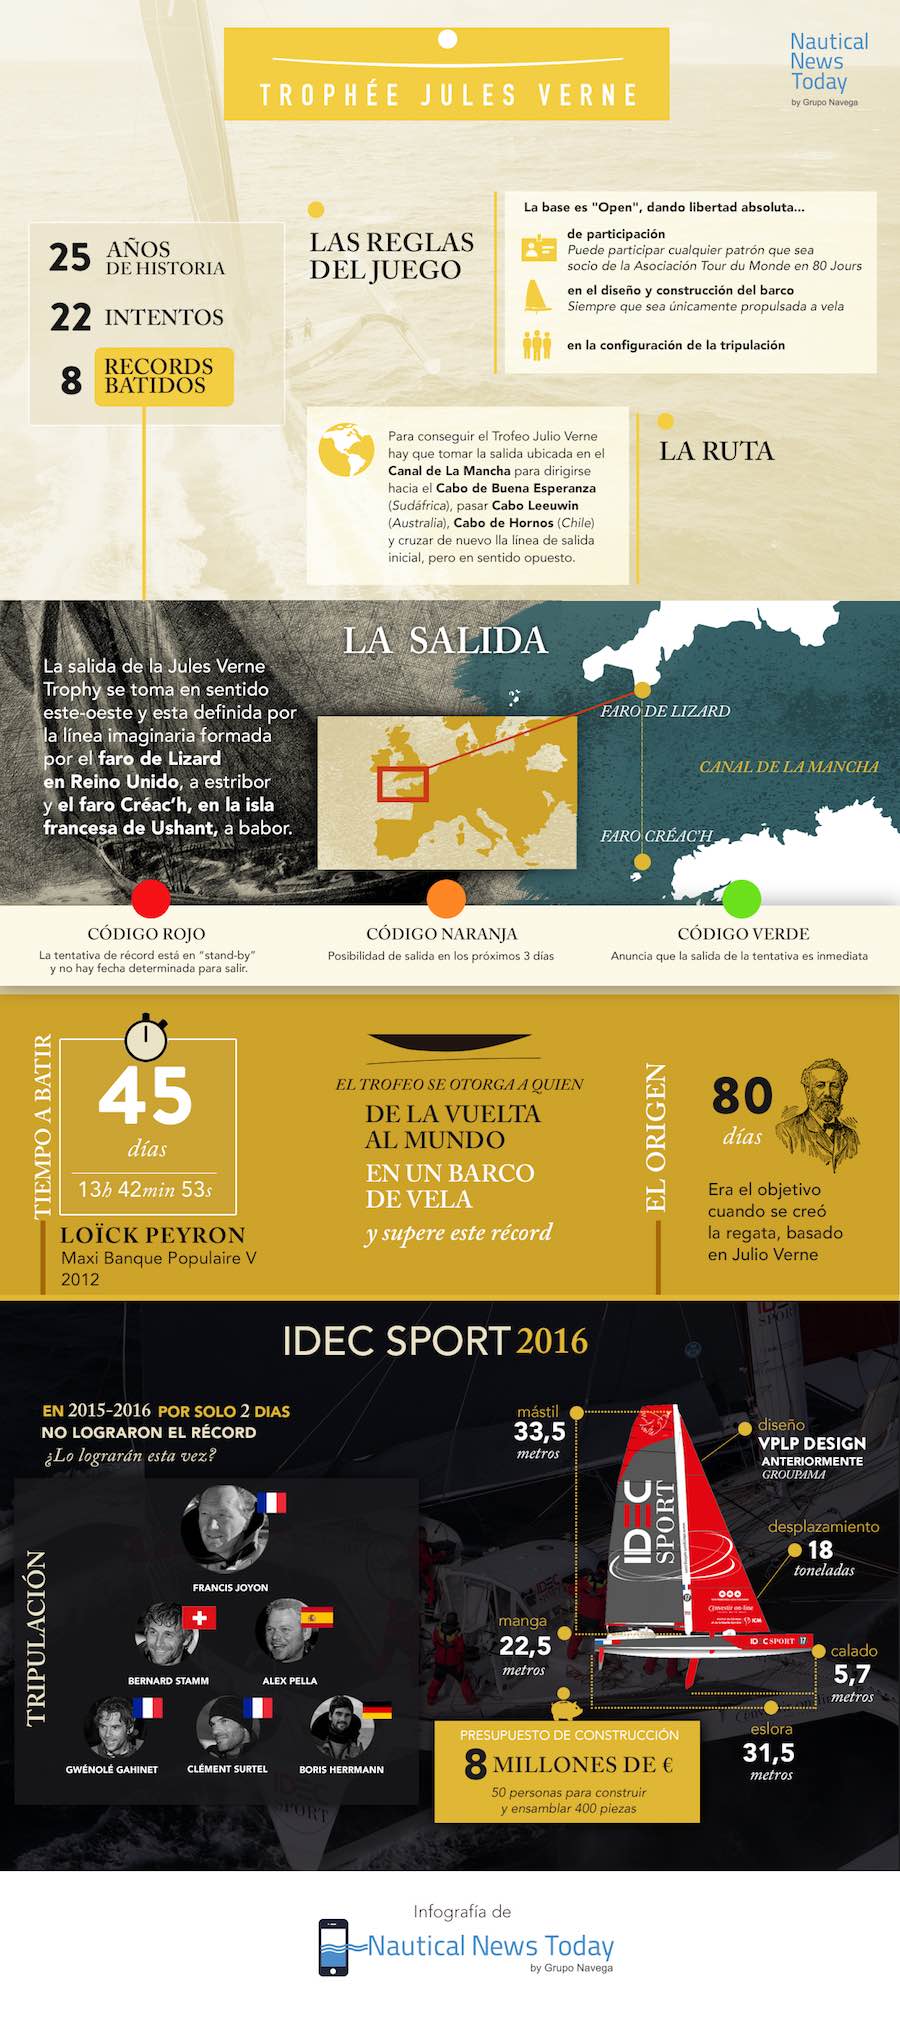 infografia trofeo julio verne 2016 1 idec sport 900